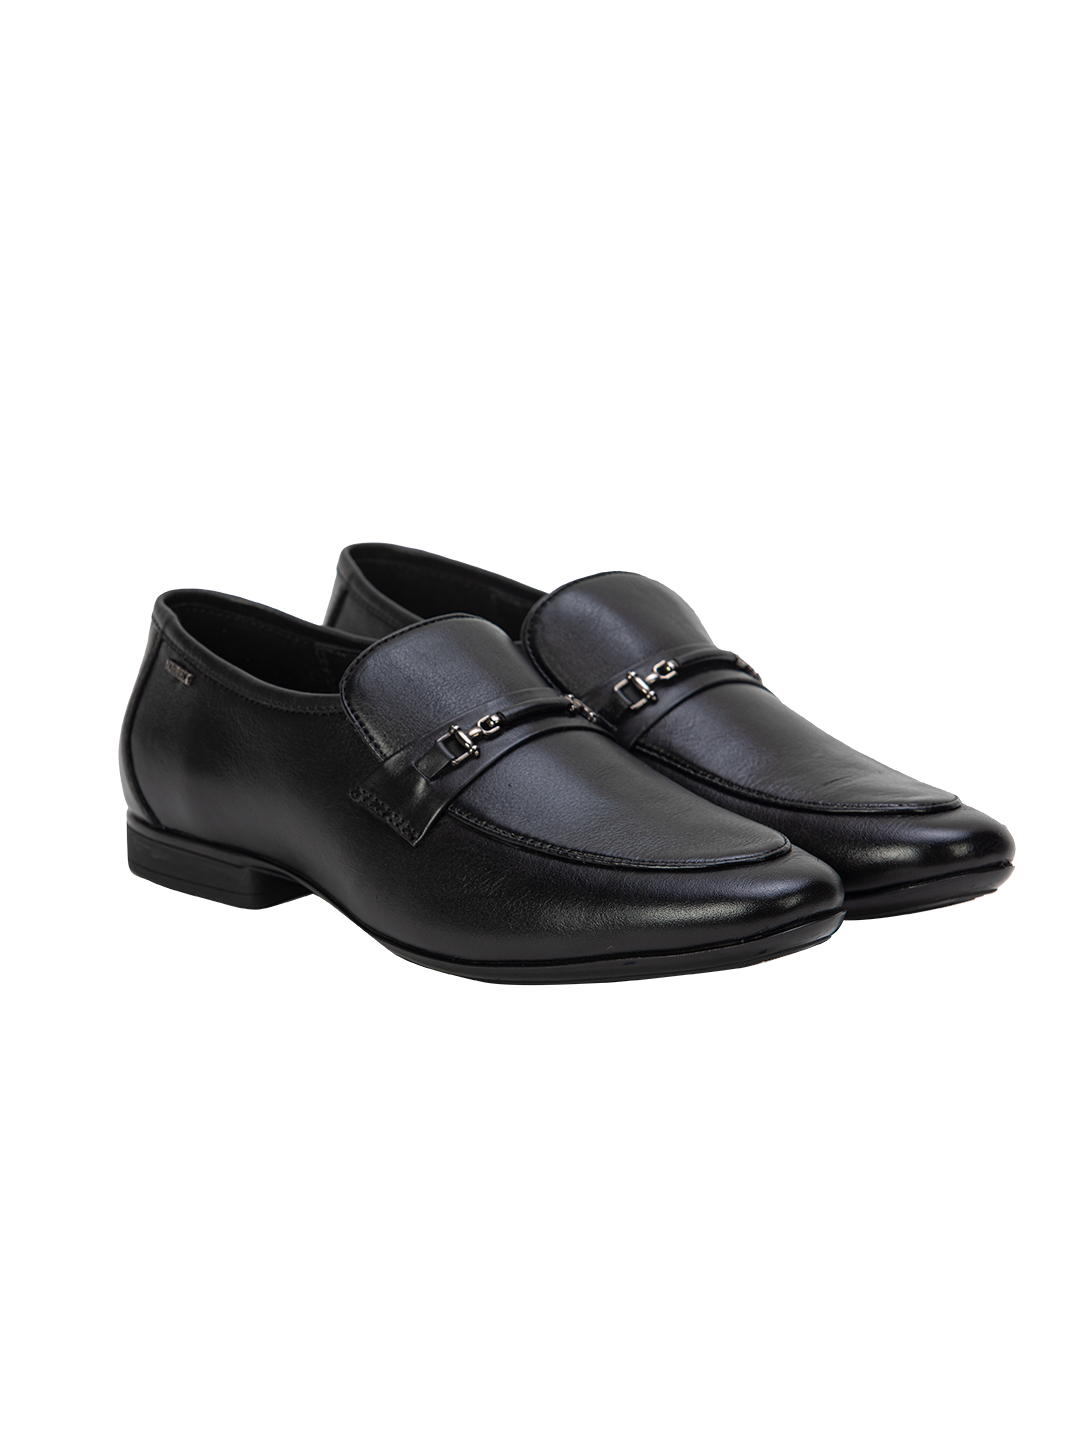 Buy Von Wellx Germany Comfort Black Glib Shoes Online in Kanpur